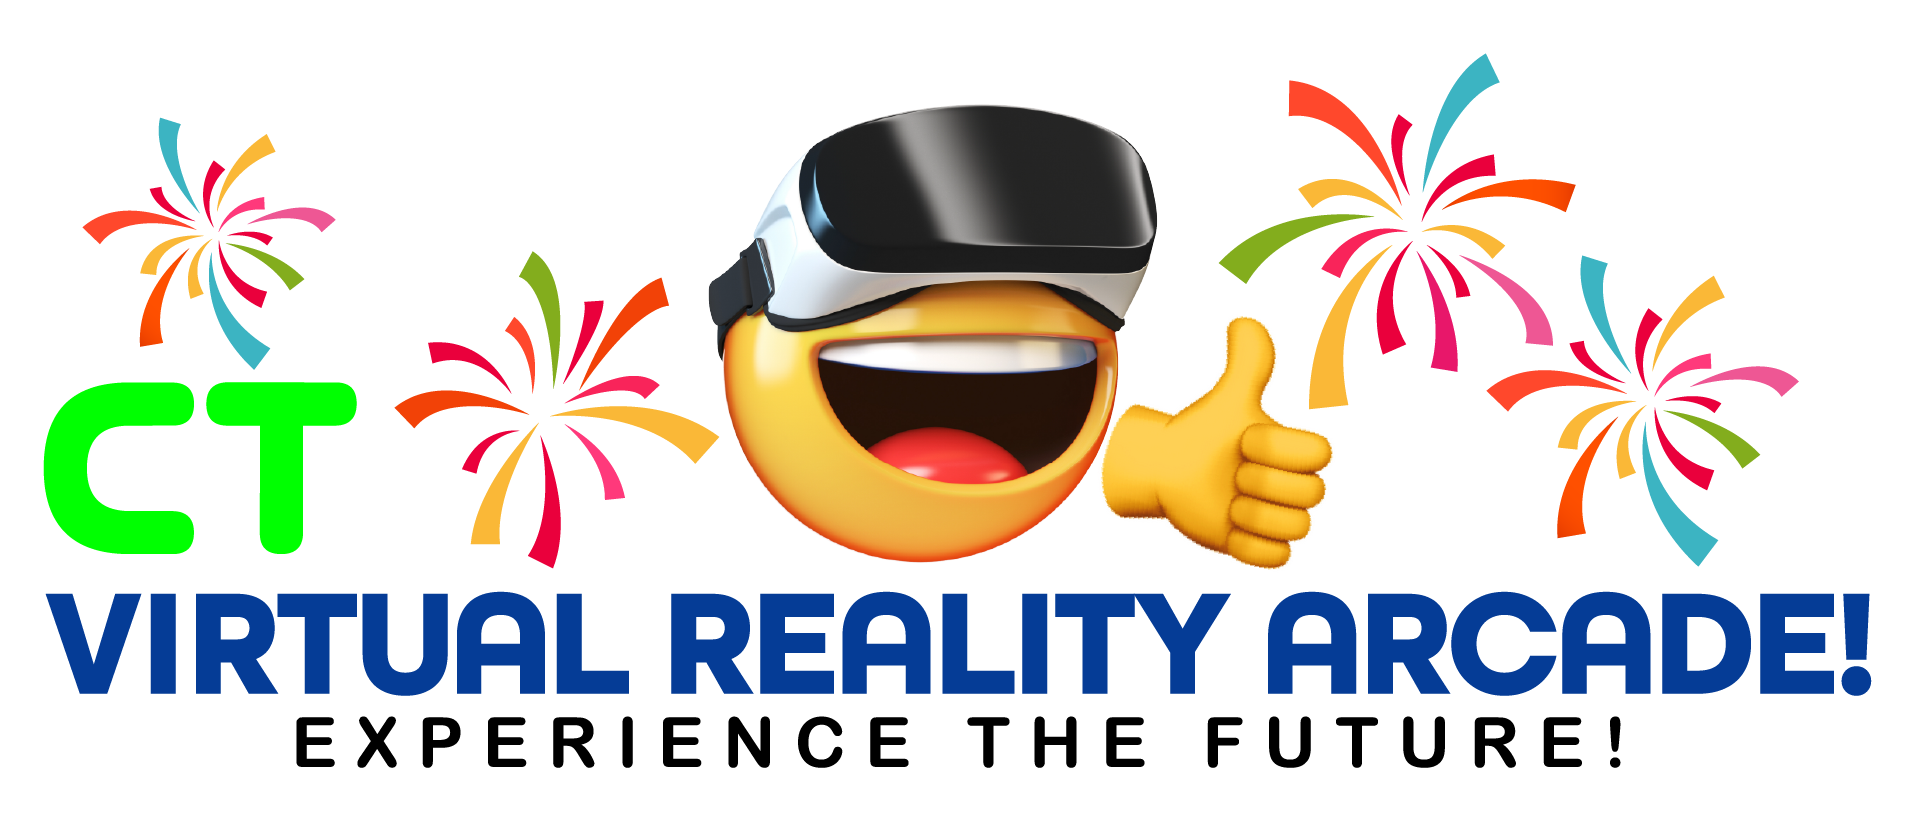 CT Virtual Reality Arcade